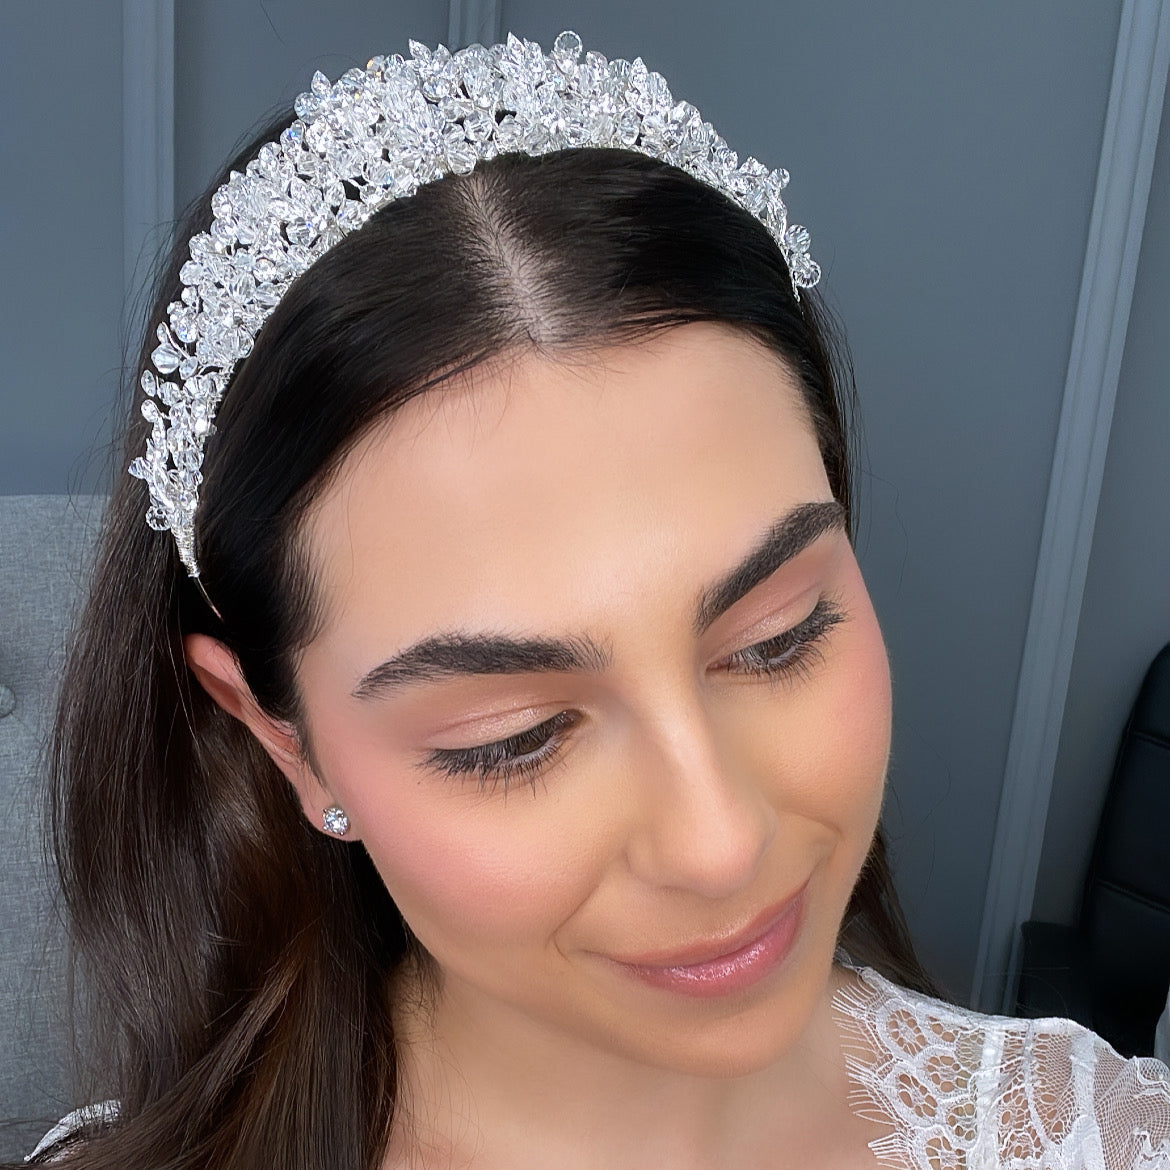 Natalie Bridal Crown Hair Accessories - Tiara & Crown    